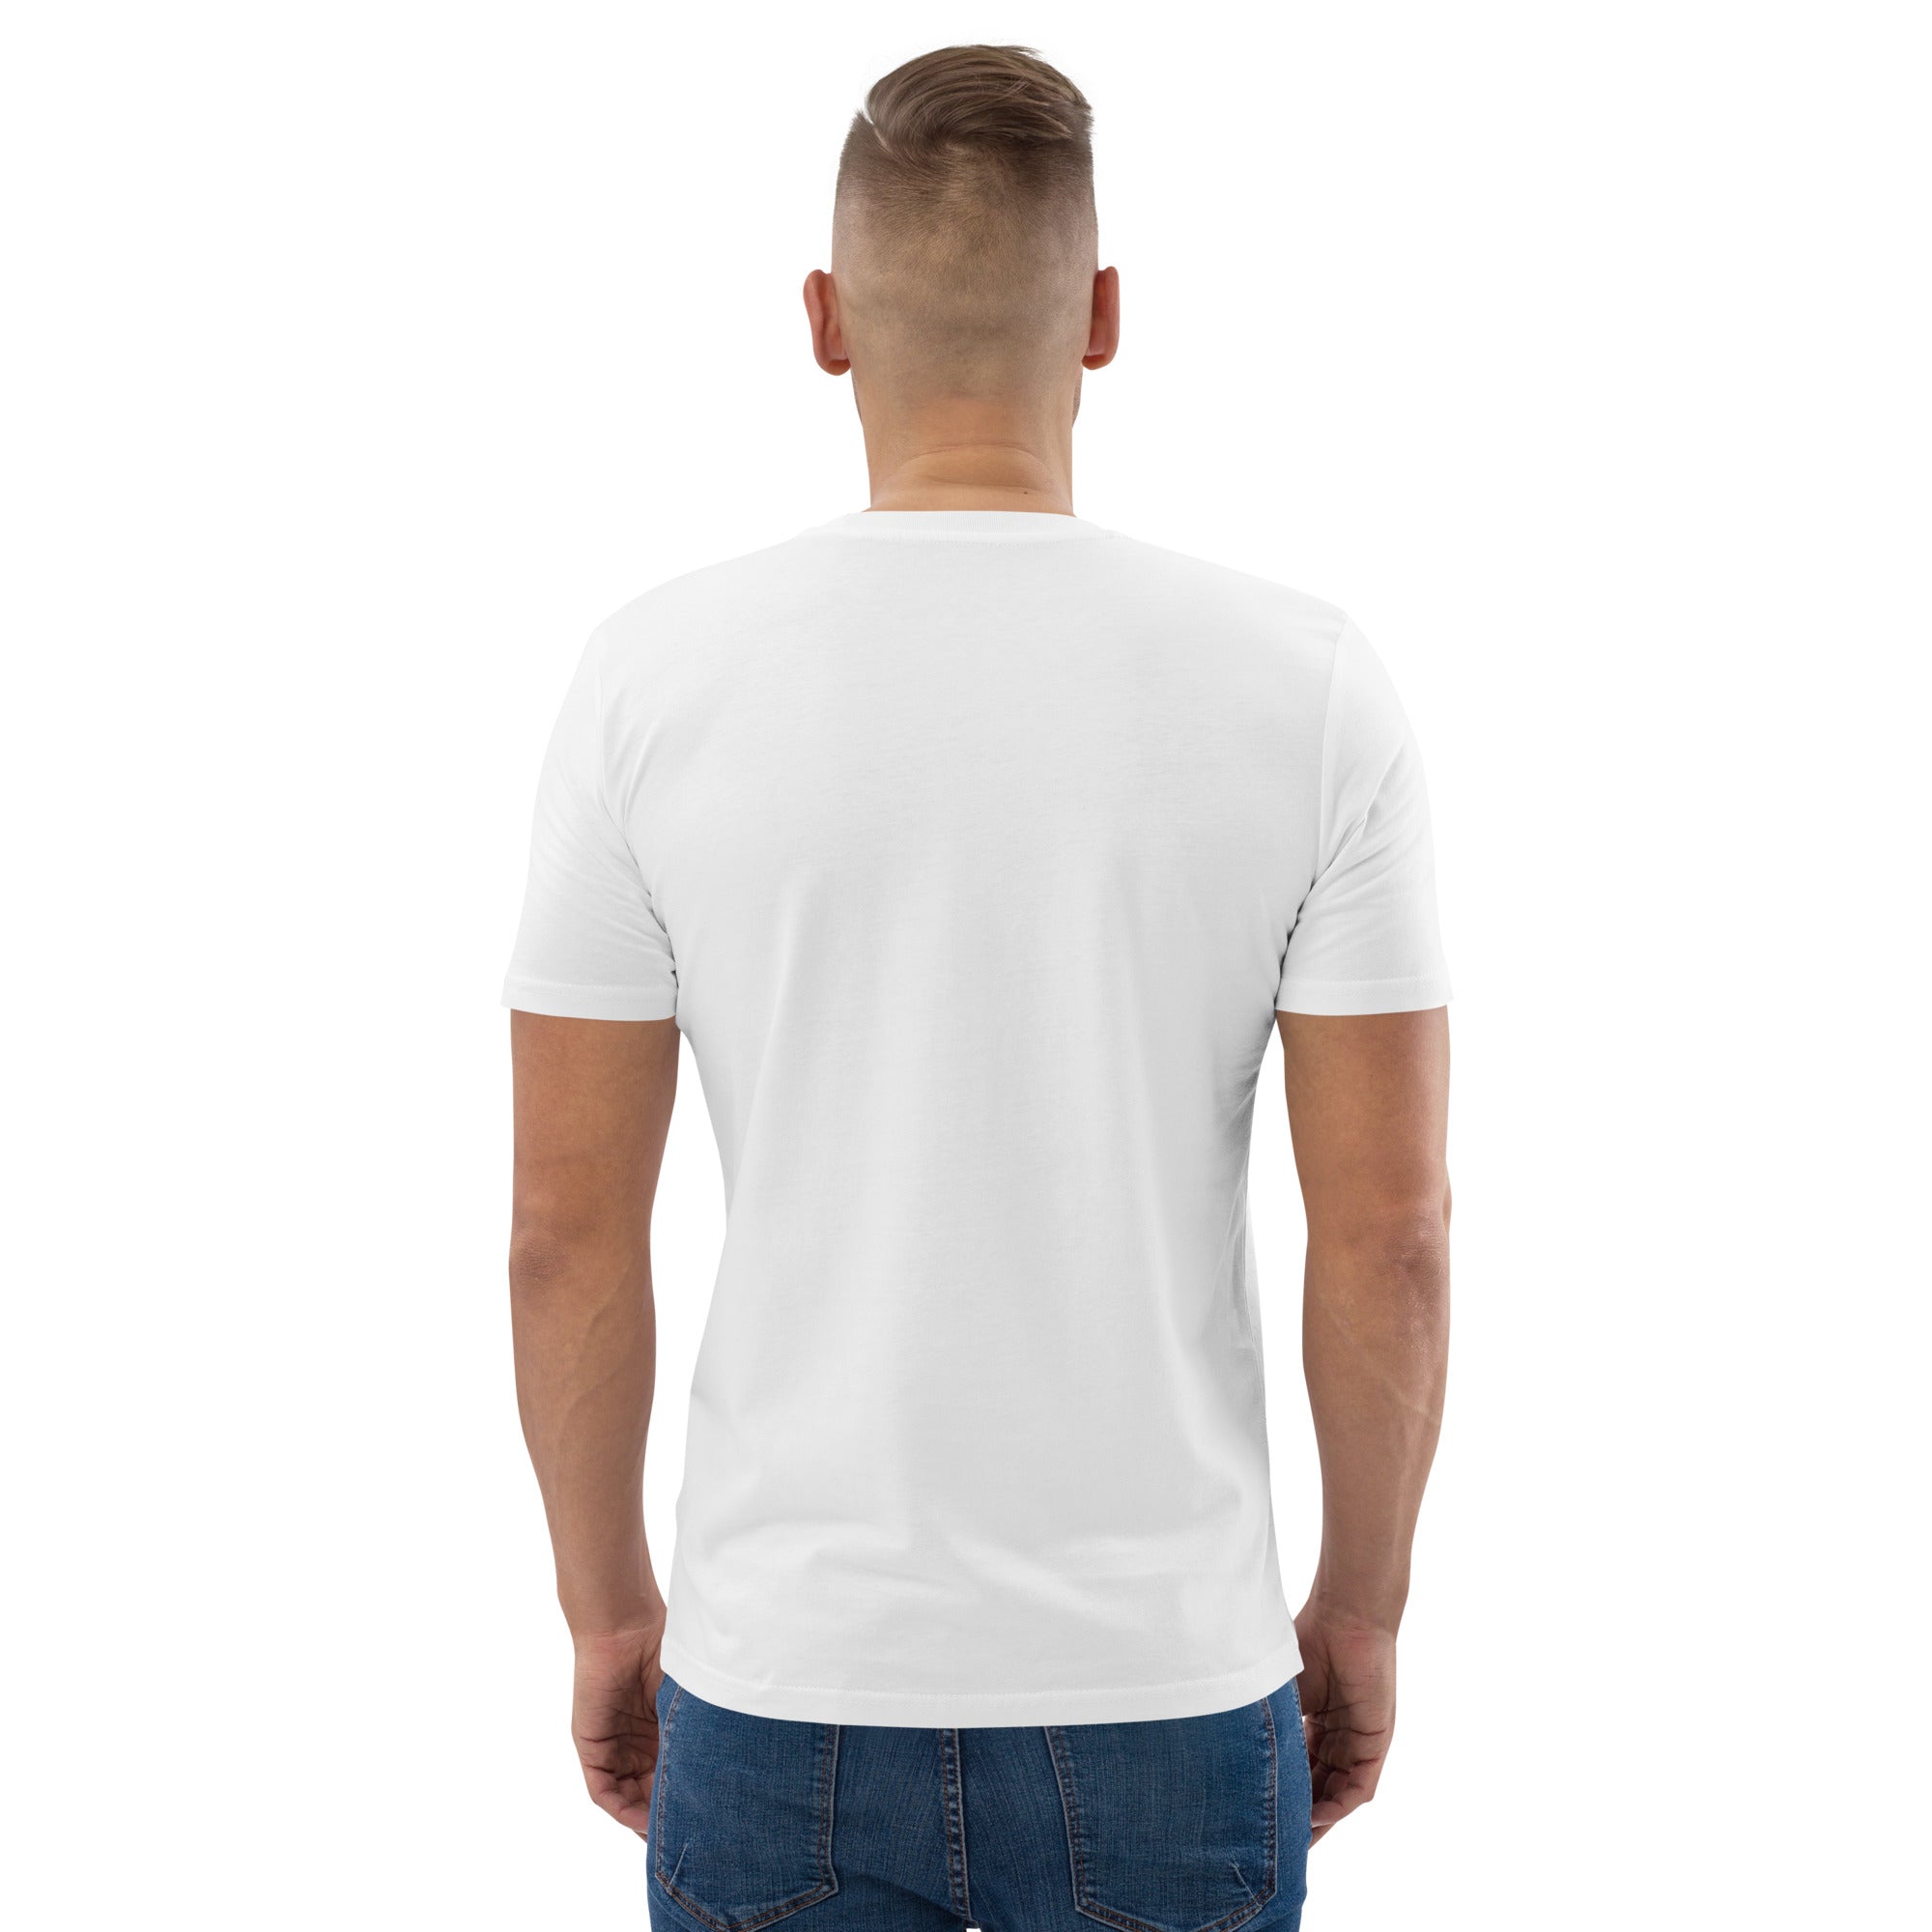 Six-Pack Donuts - T-shirt unisexe en coton bio